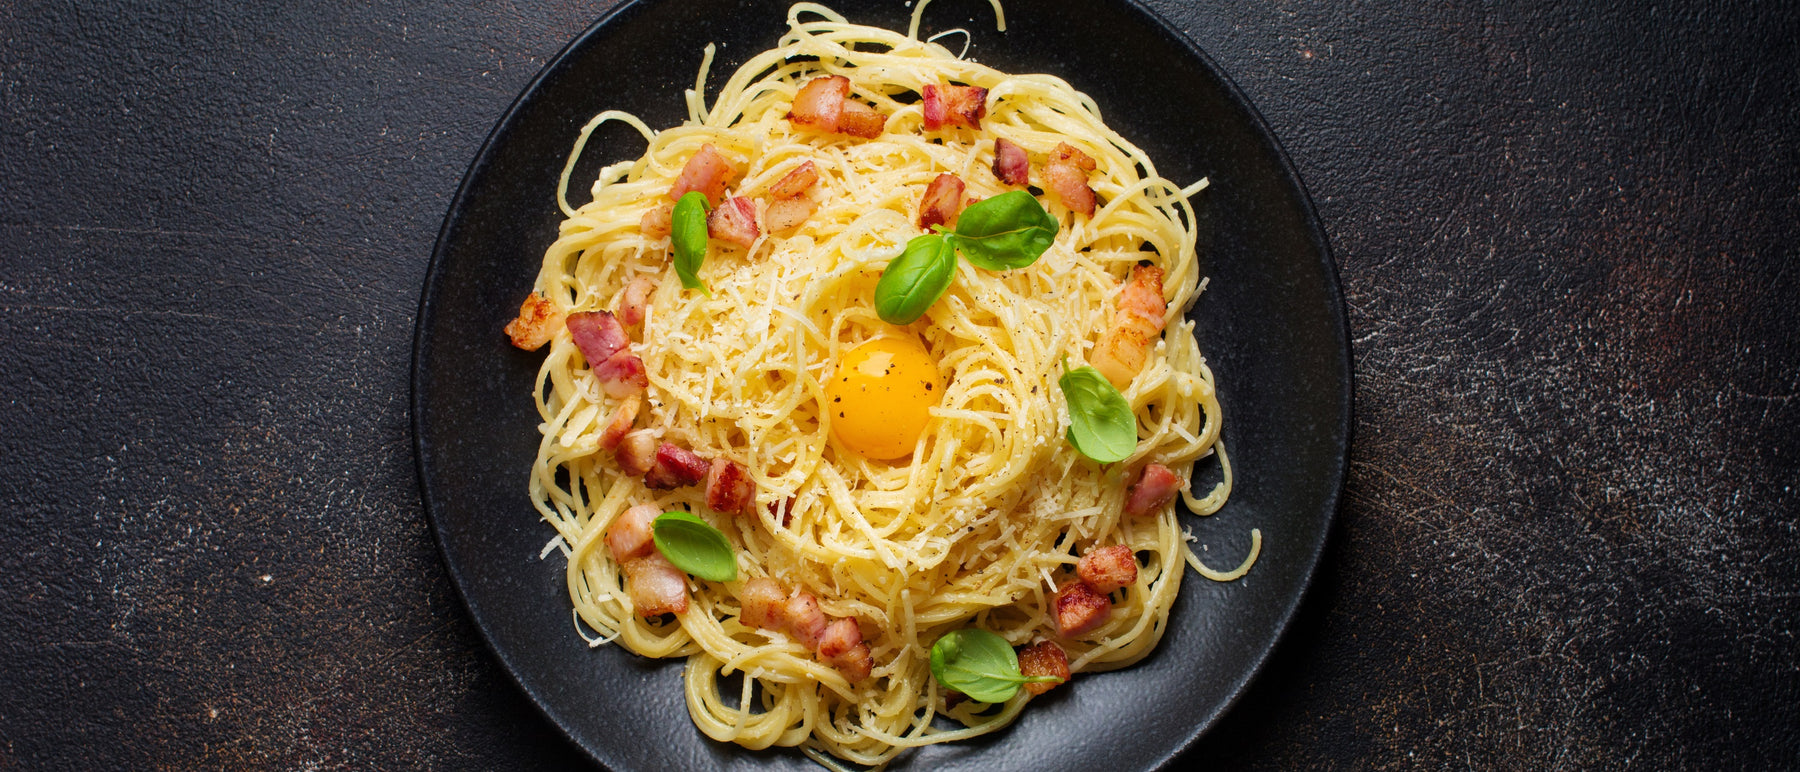 How to Make Spaghetti Carbonara with Crispy Bacon